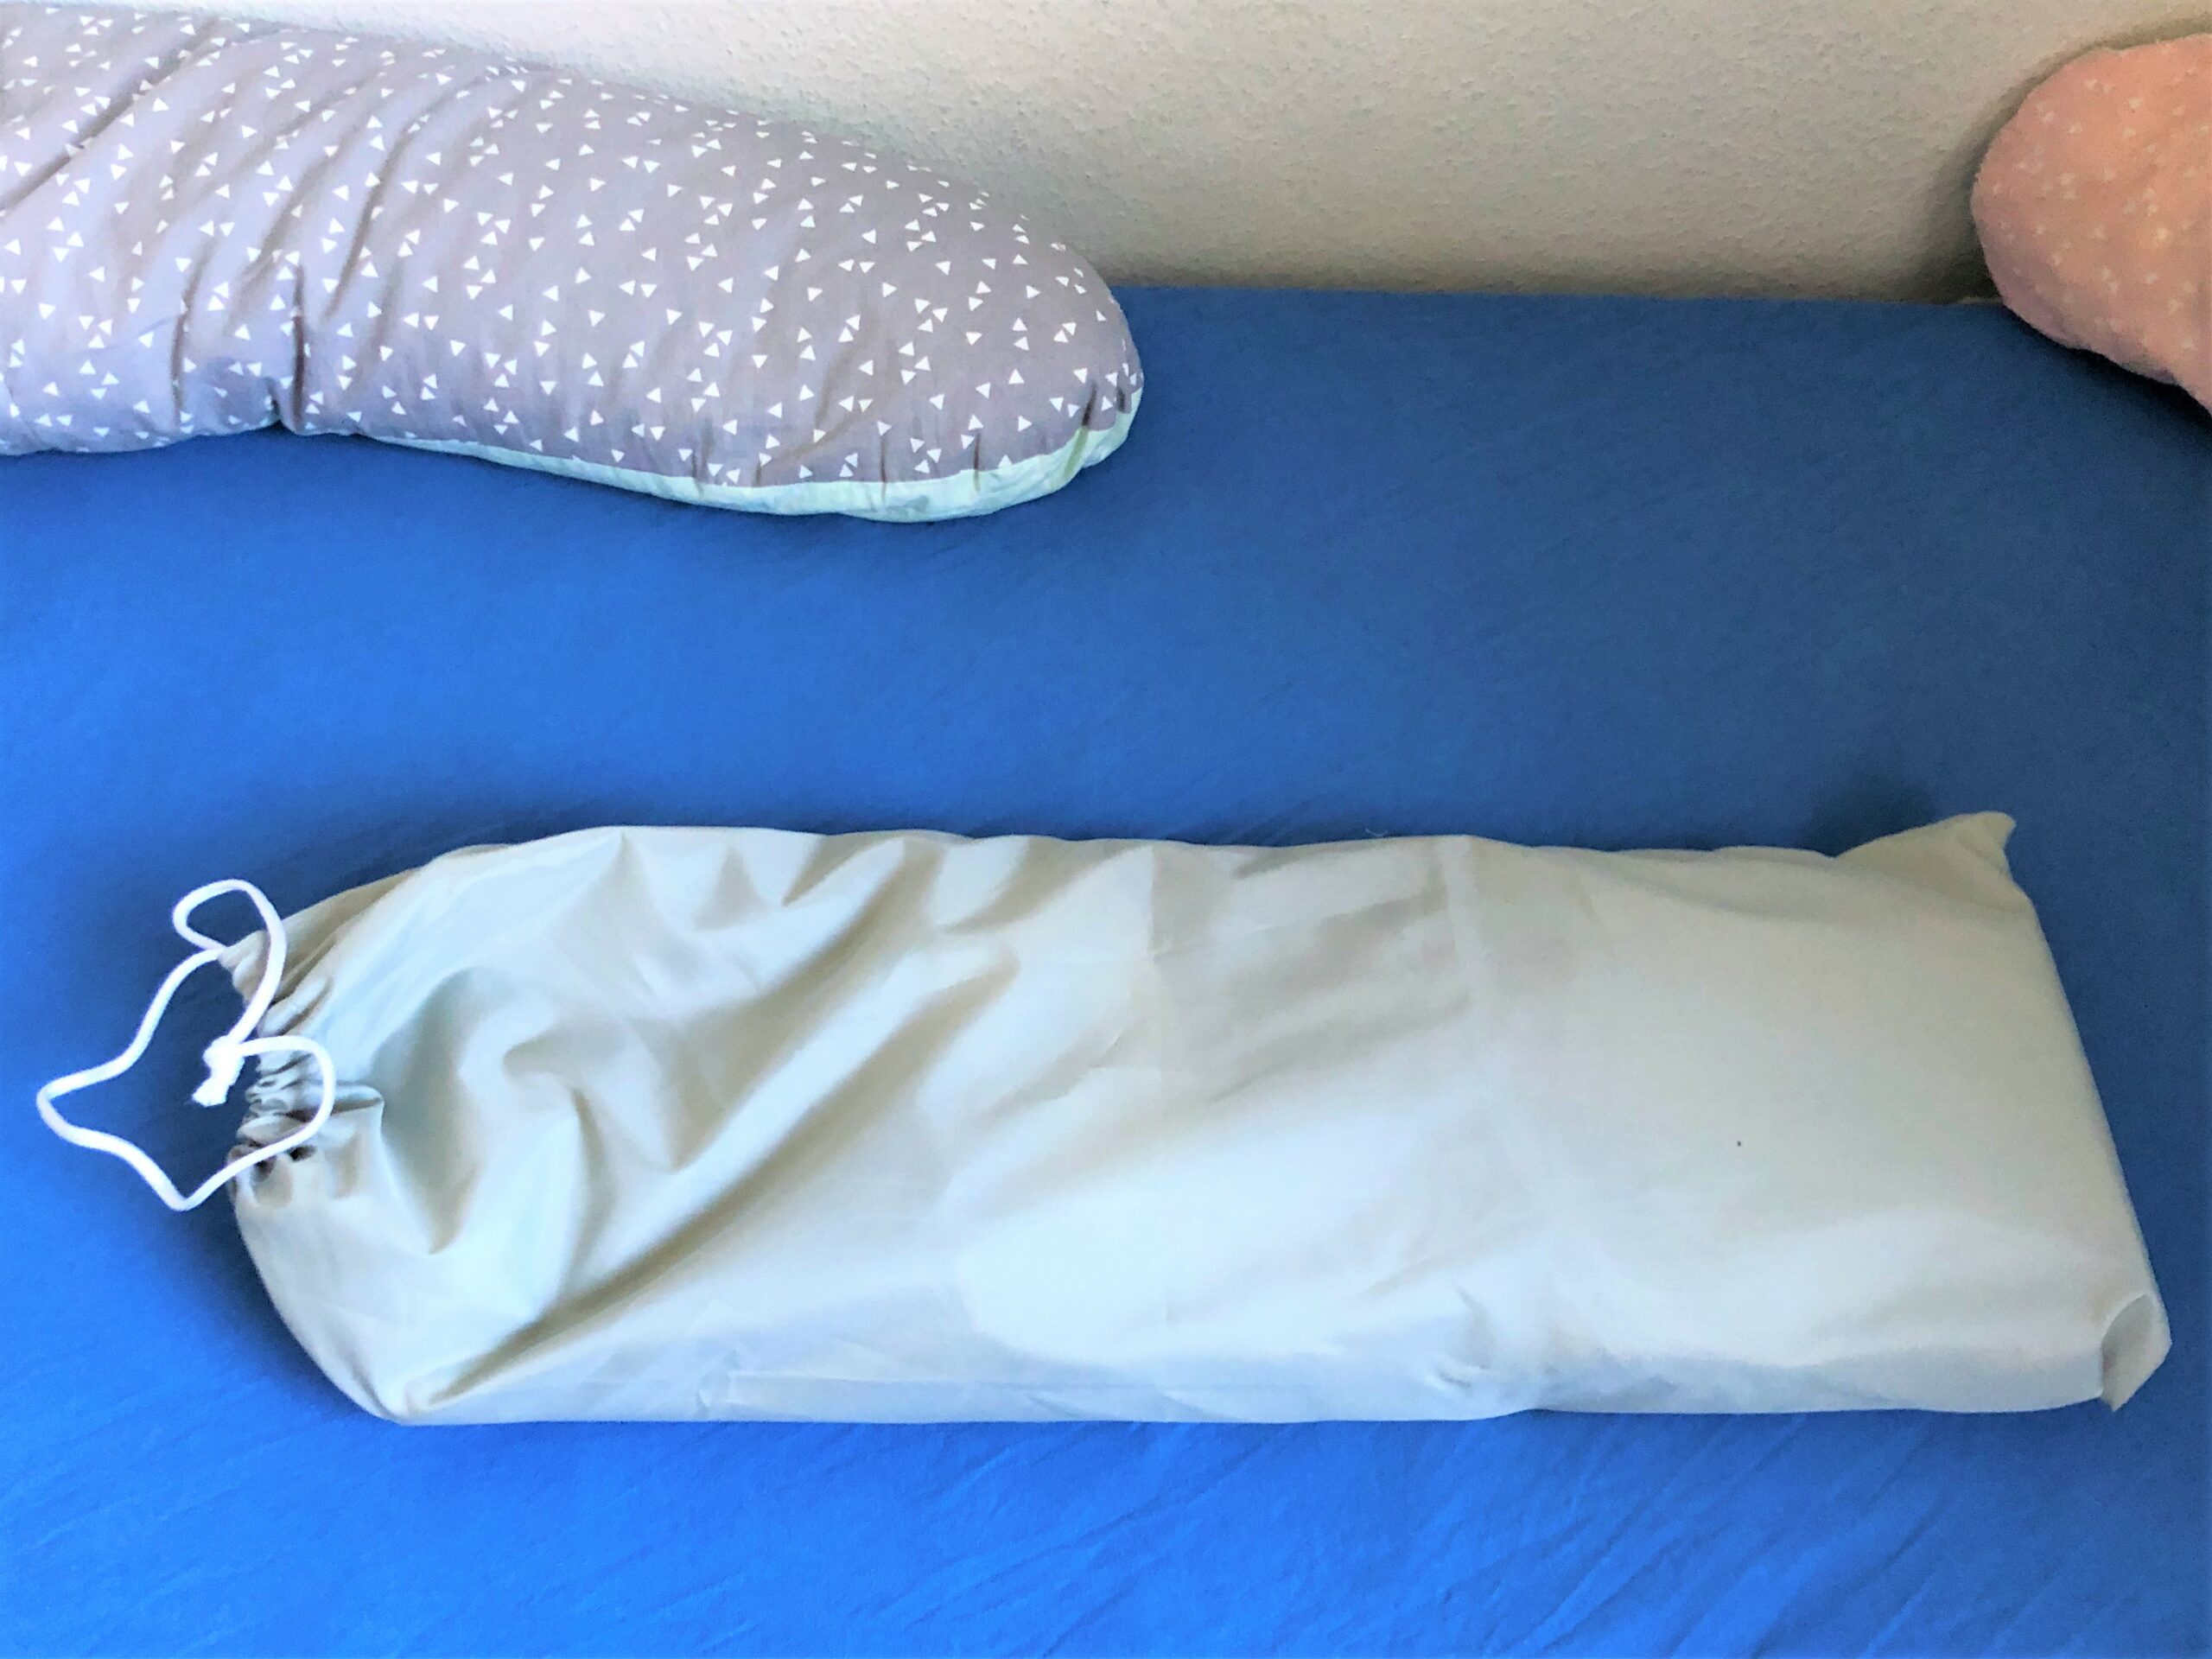 Rausfallschutz Bett Test Vergleich, Kinderbett Rausfallschutz, Reer Bettgitter By My Side klappbar mit Tasche